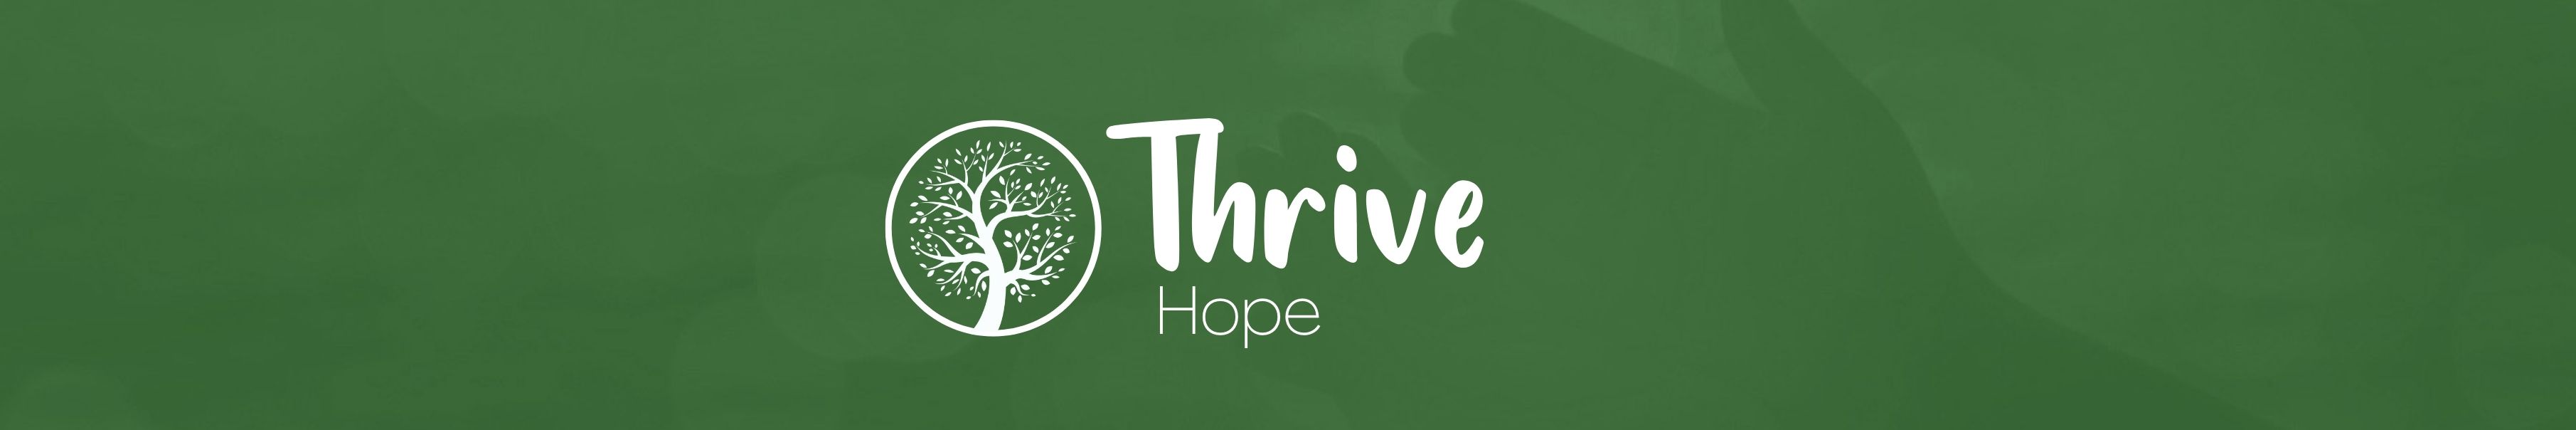 Thrive Hope